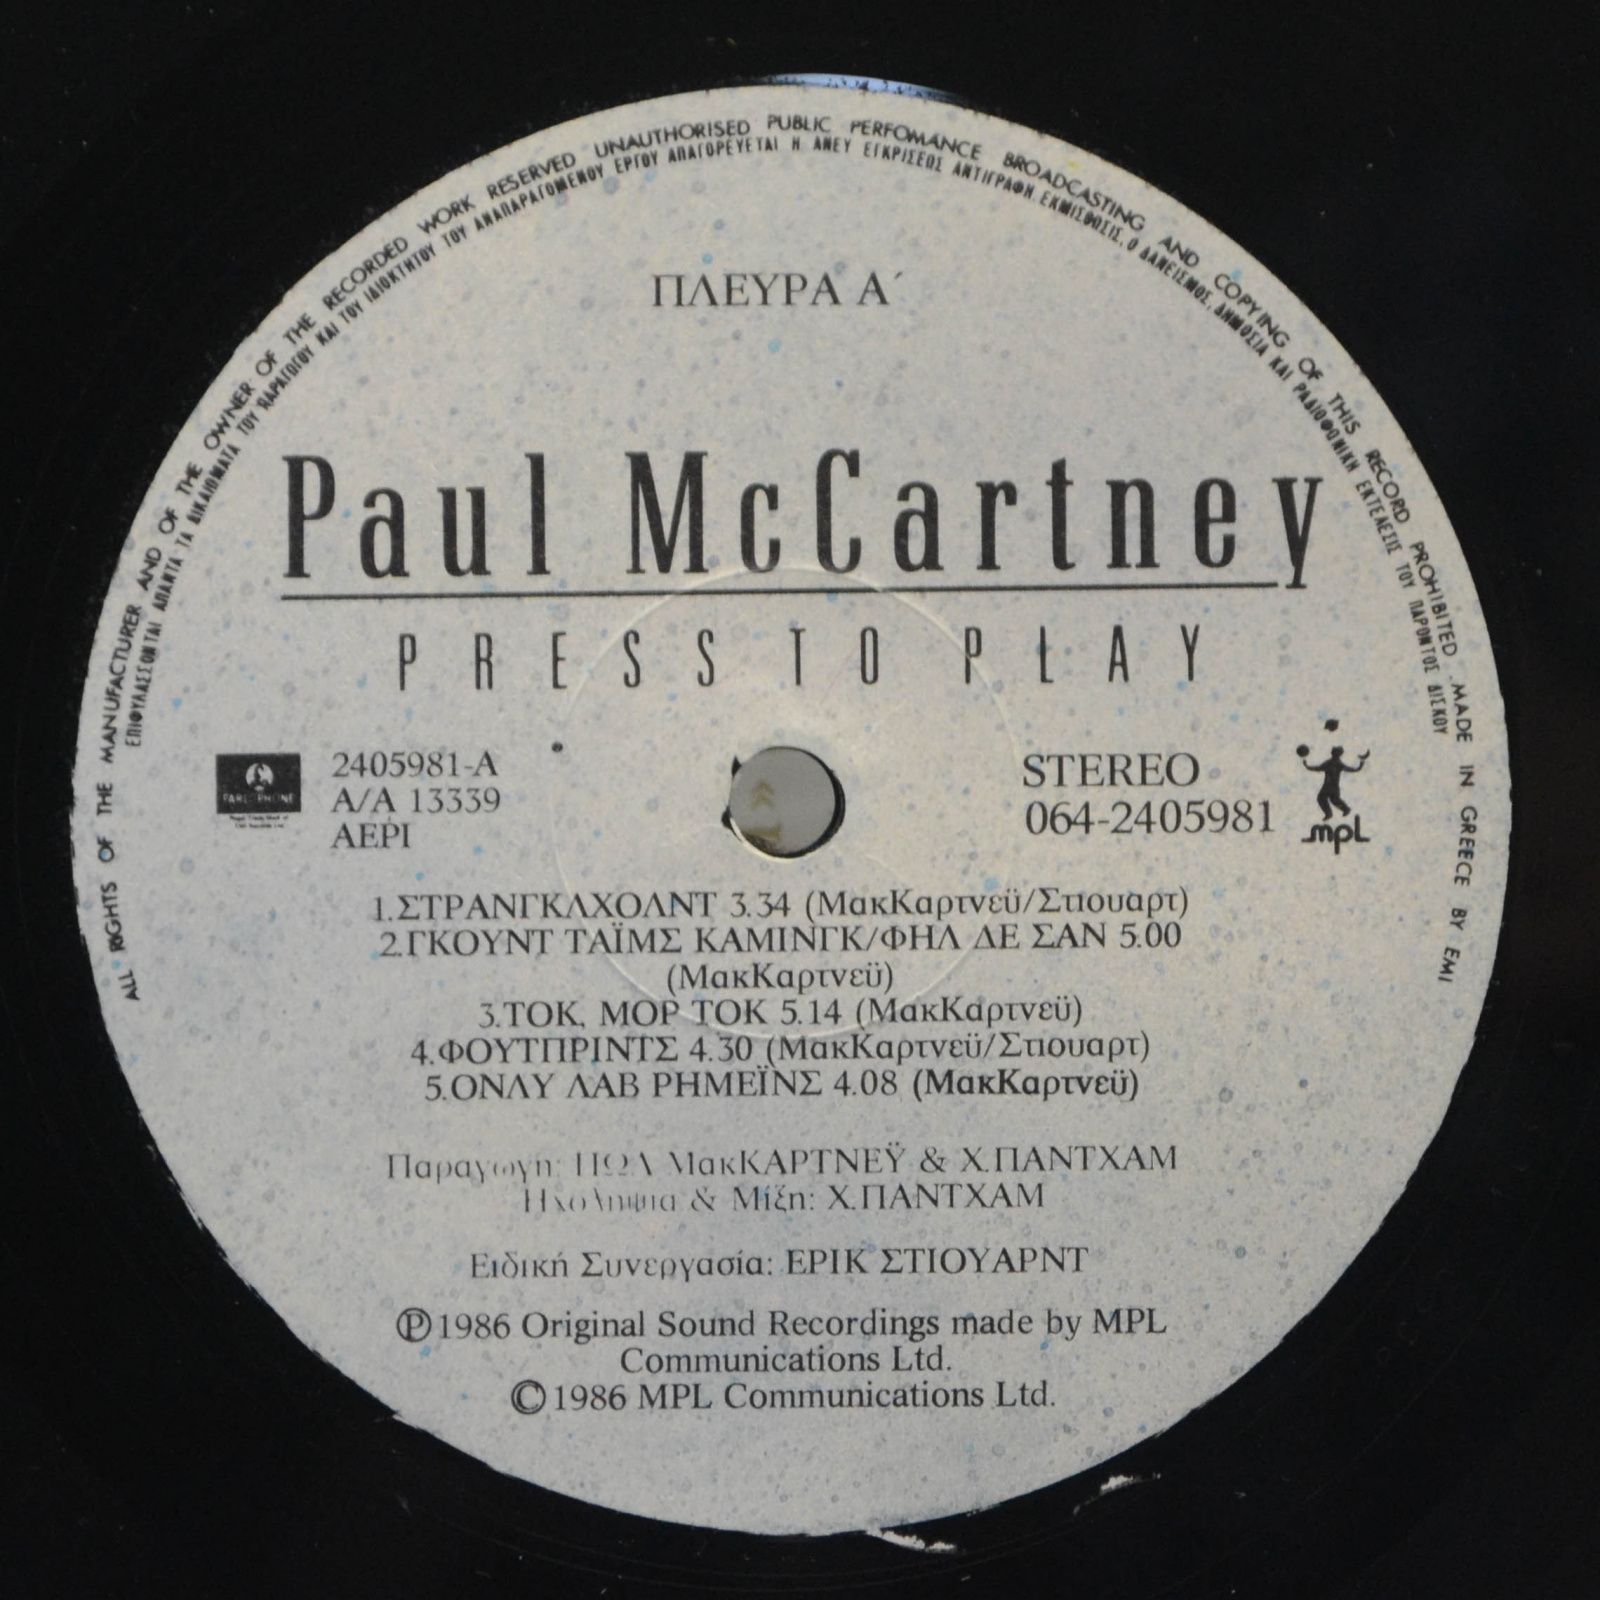 Paul McCartney — Press To Play, 1986